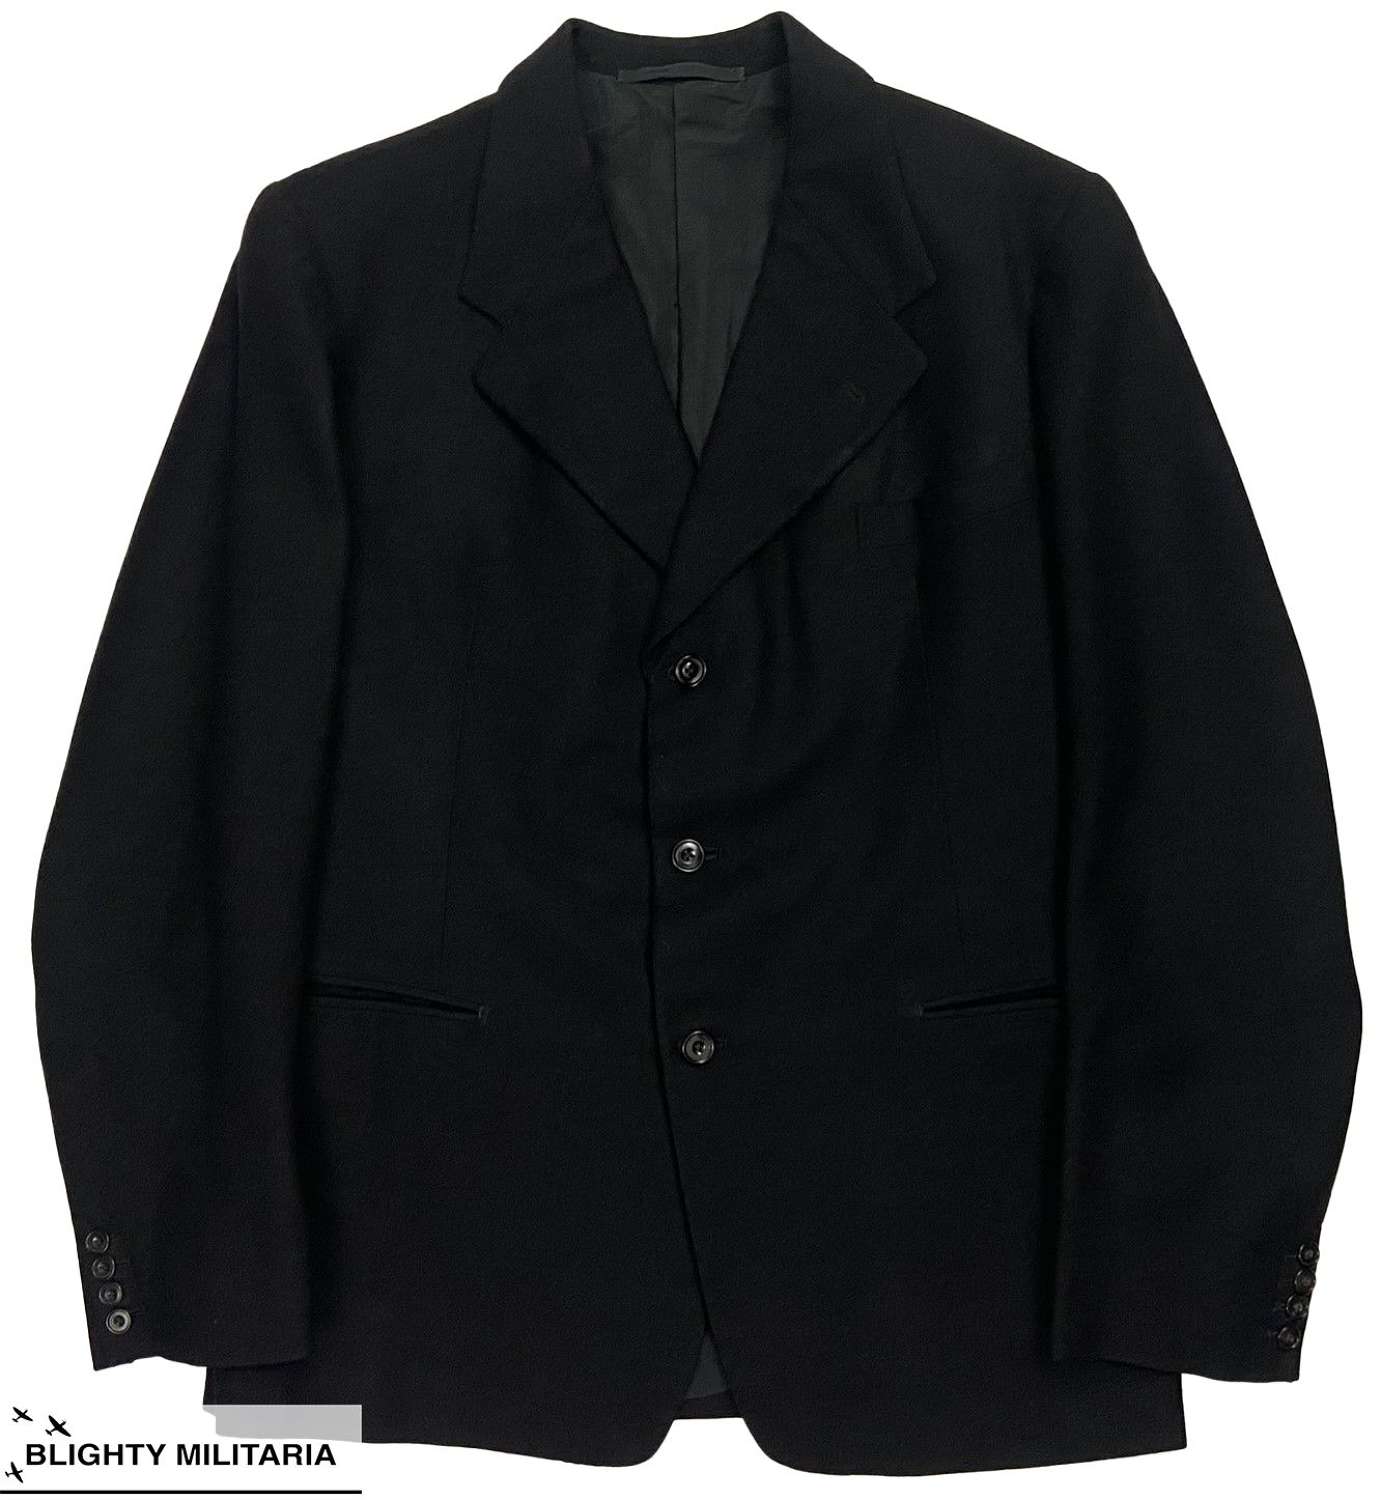 Original 1940s British Men's Single Breasted Wool Jacket